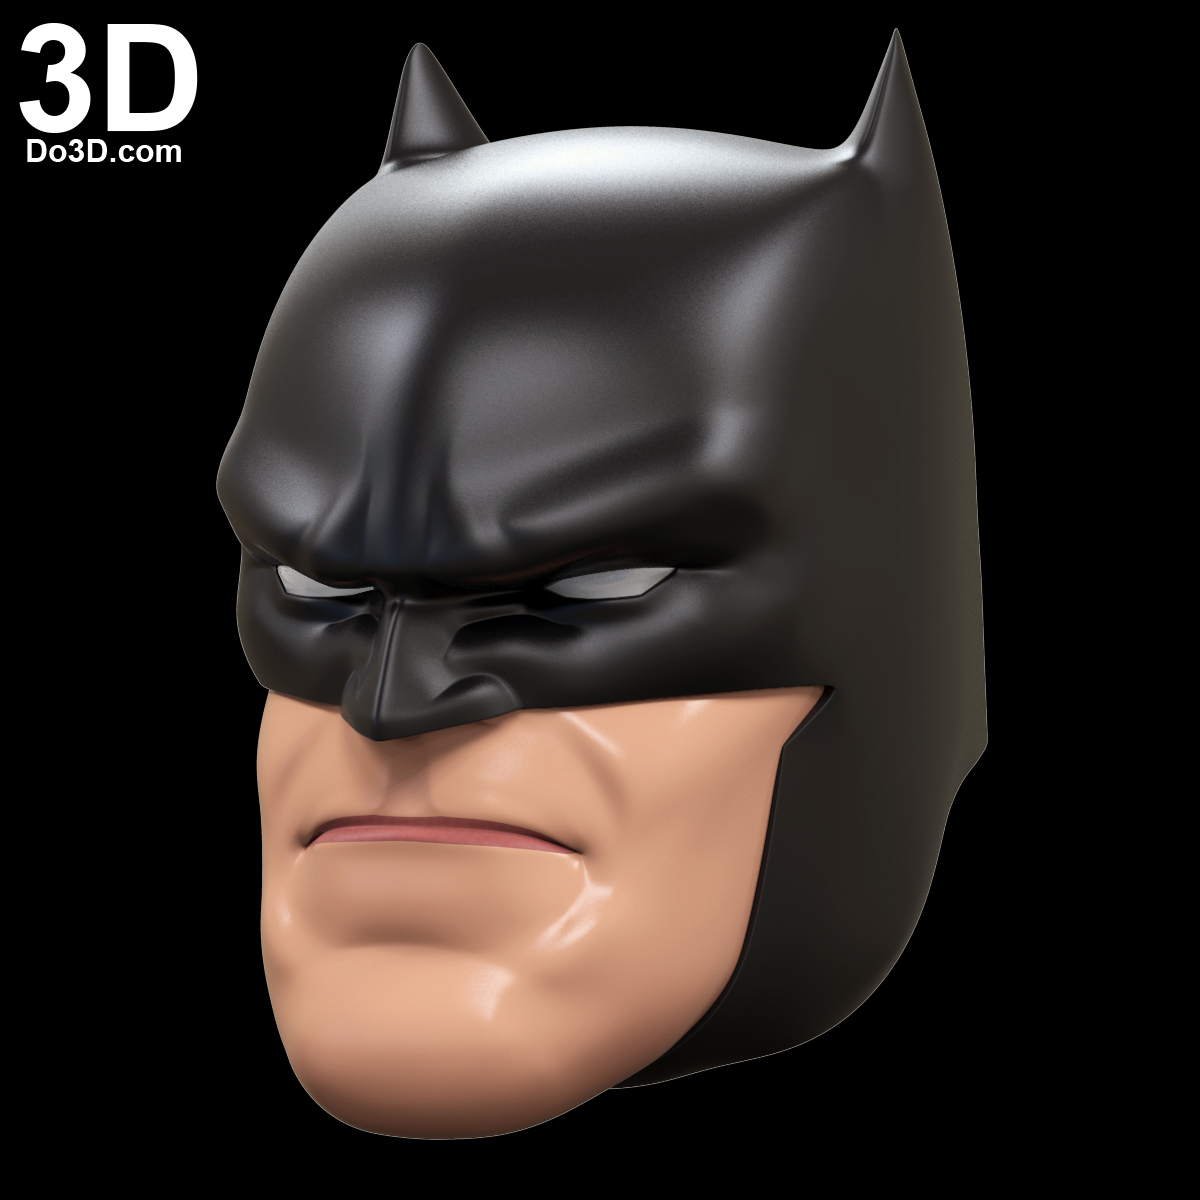 3d batman. Batman Returns Cowl 3d model. 3d Batman rkiton. Batman Cowl 3d model. Фигурка головы Бэтмена.